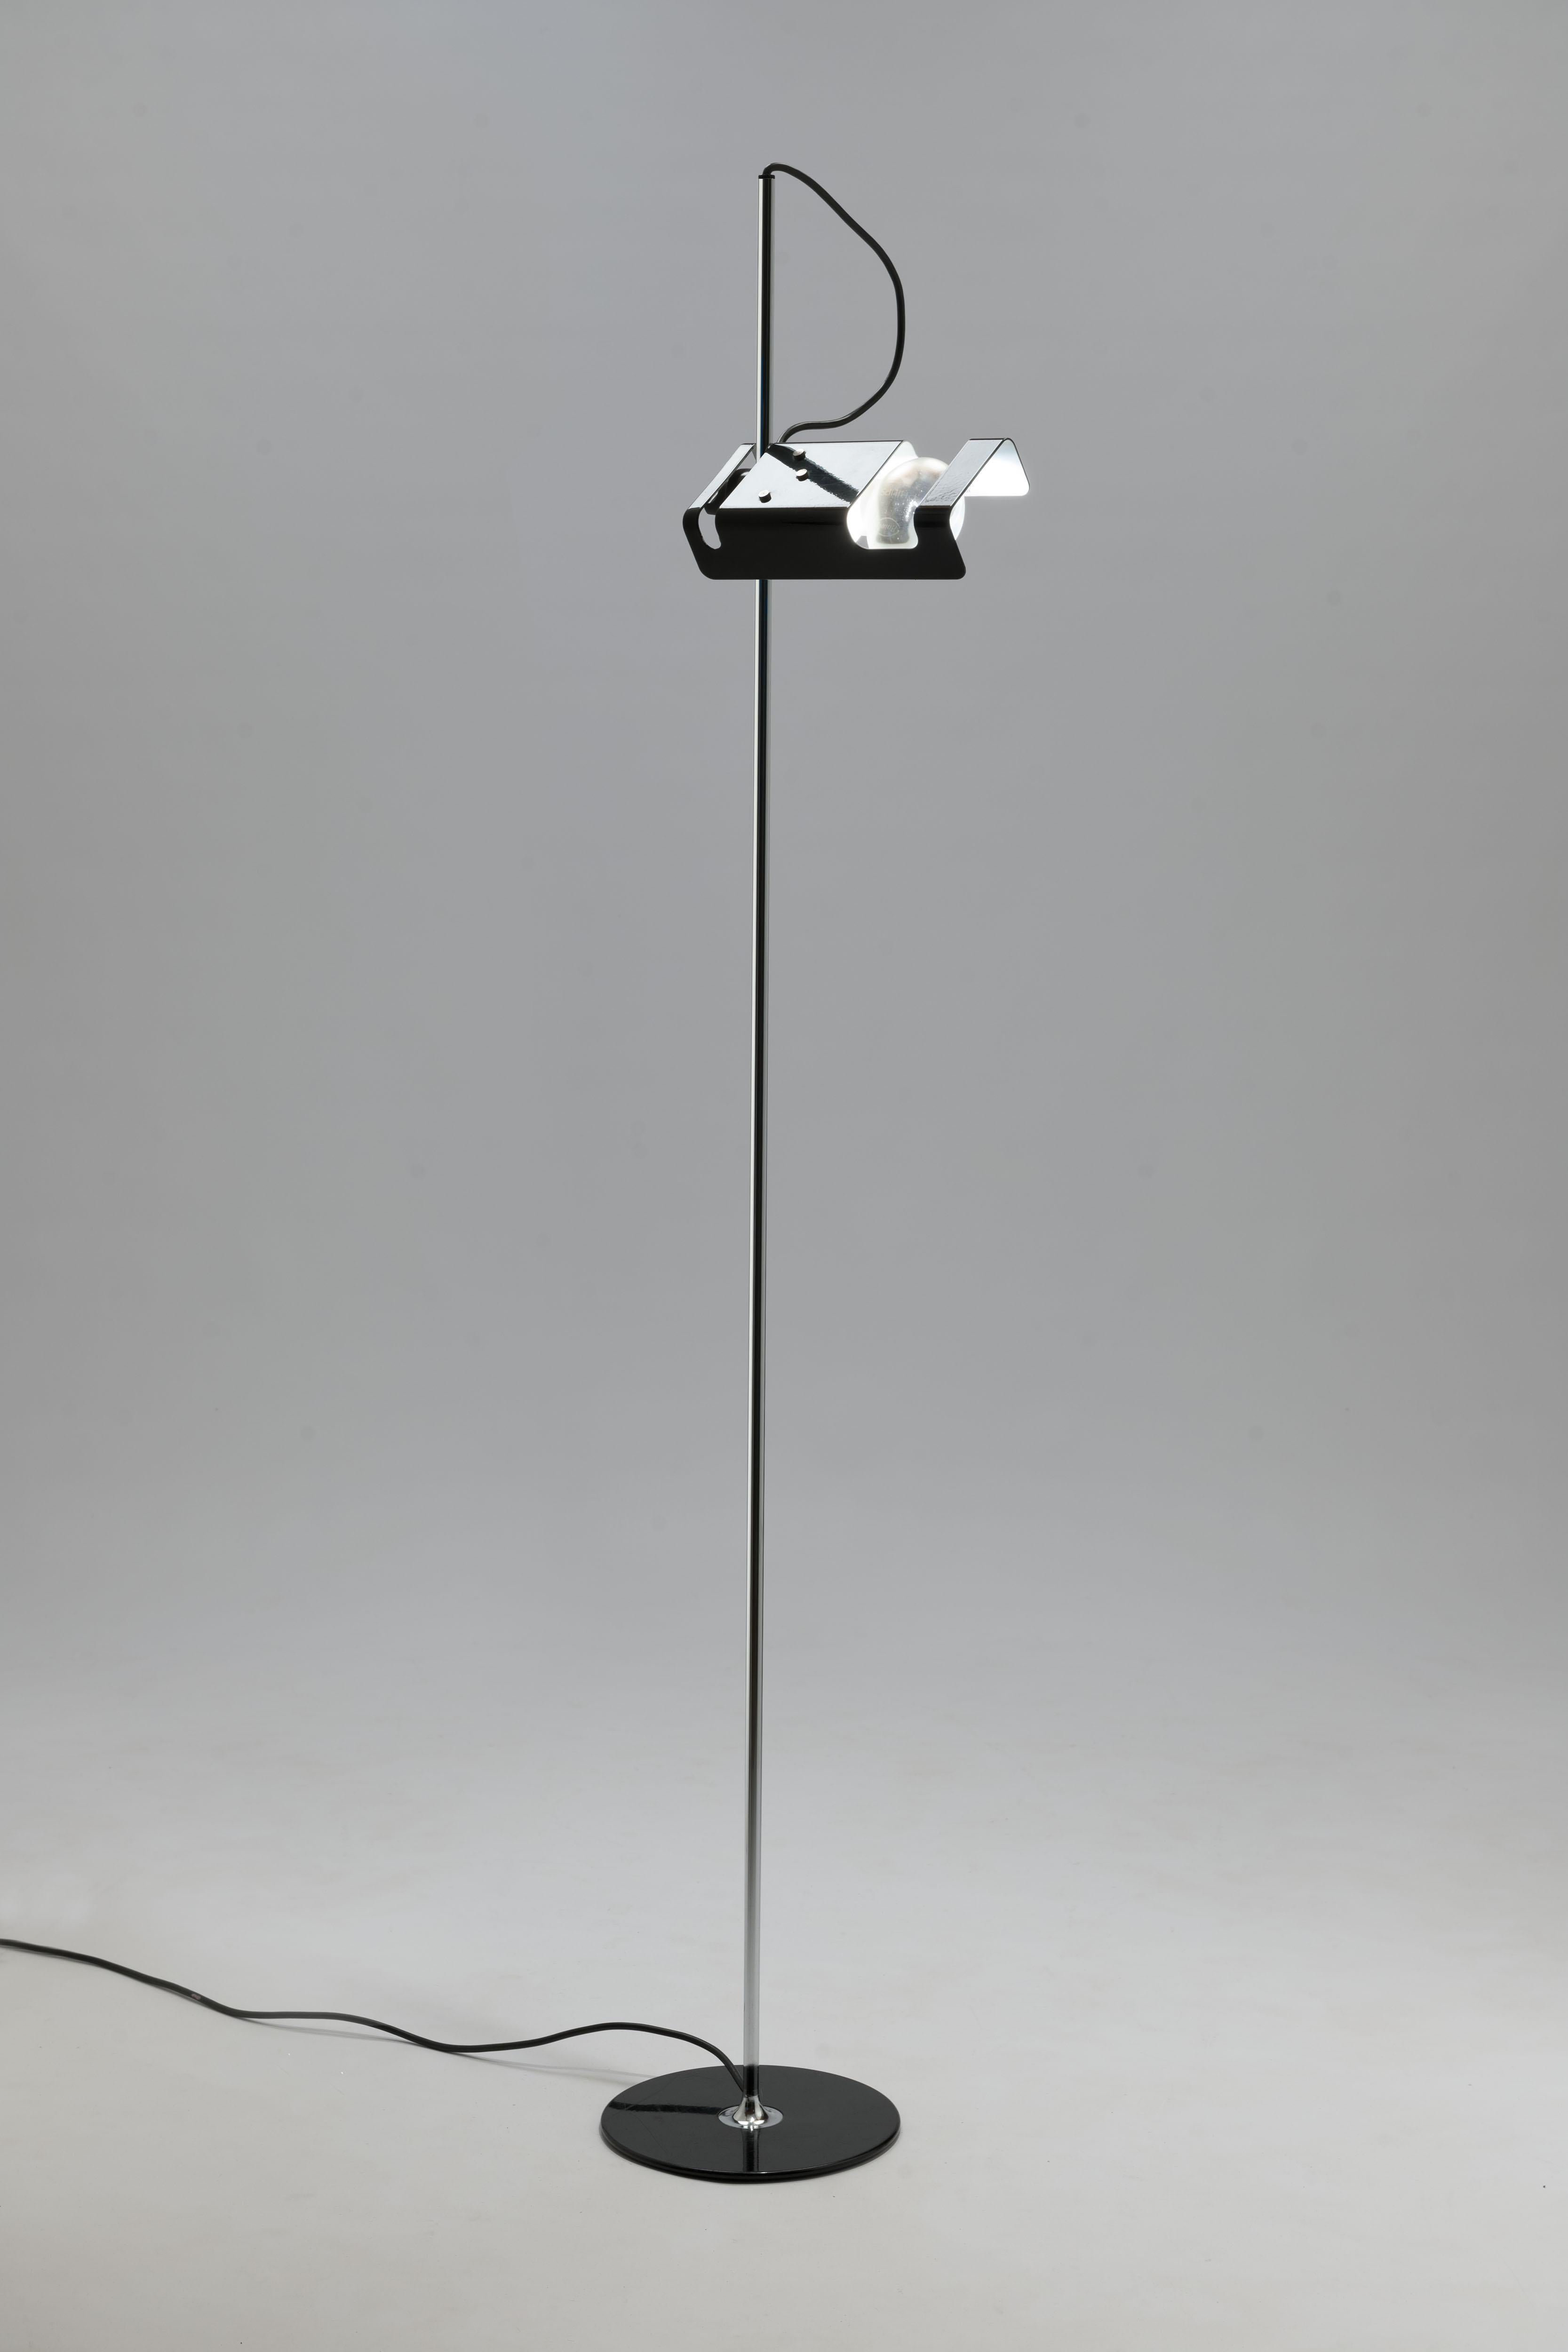 Black Joe Colombo Spider Floor Lamp by Oluce, Italy, 1965 7